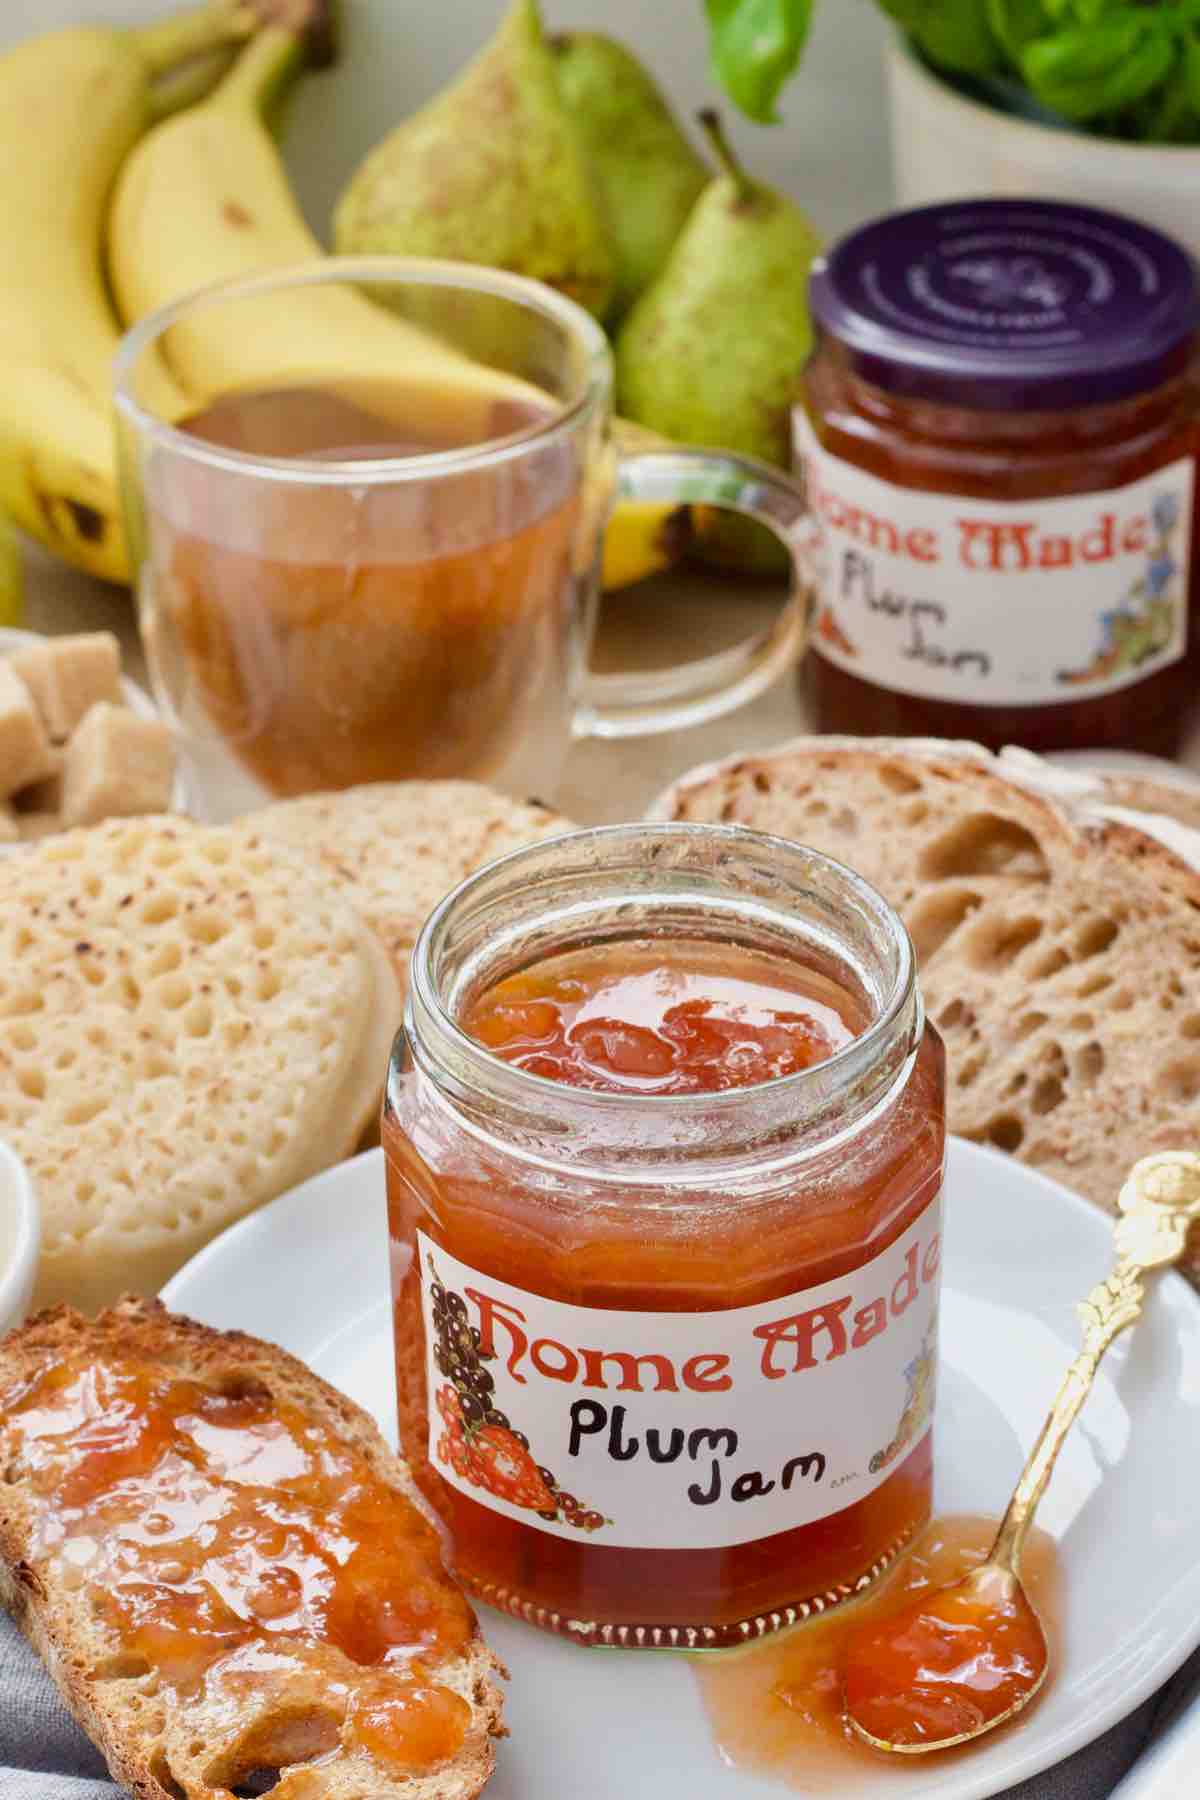 Open plum jam jar on the plate with breakfast spread around.